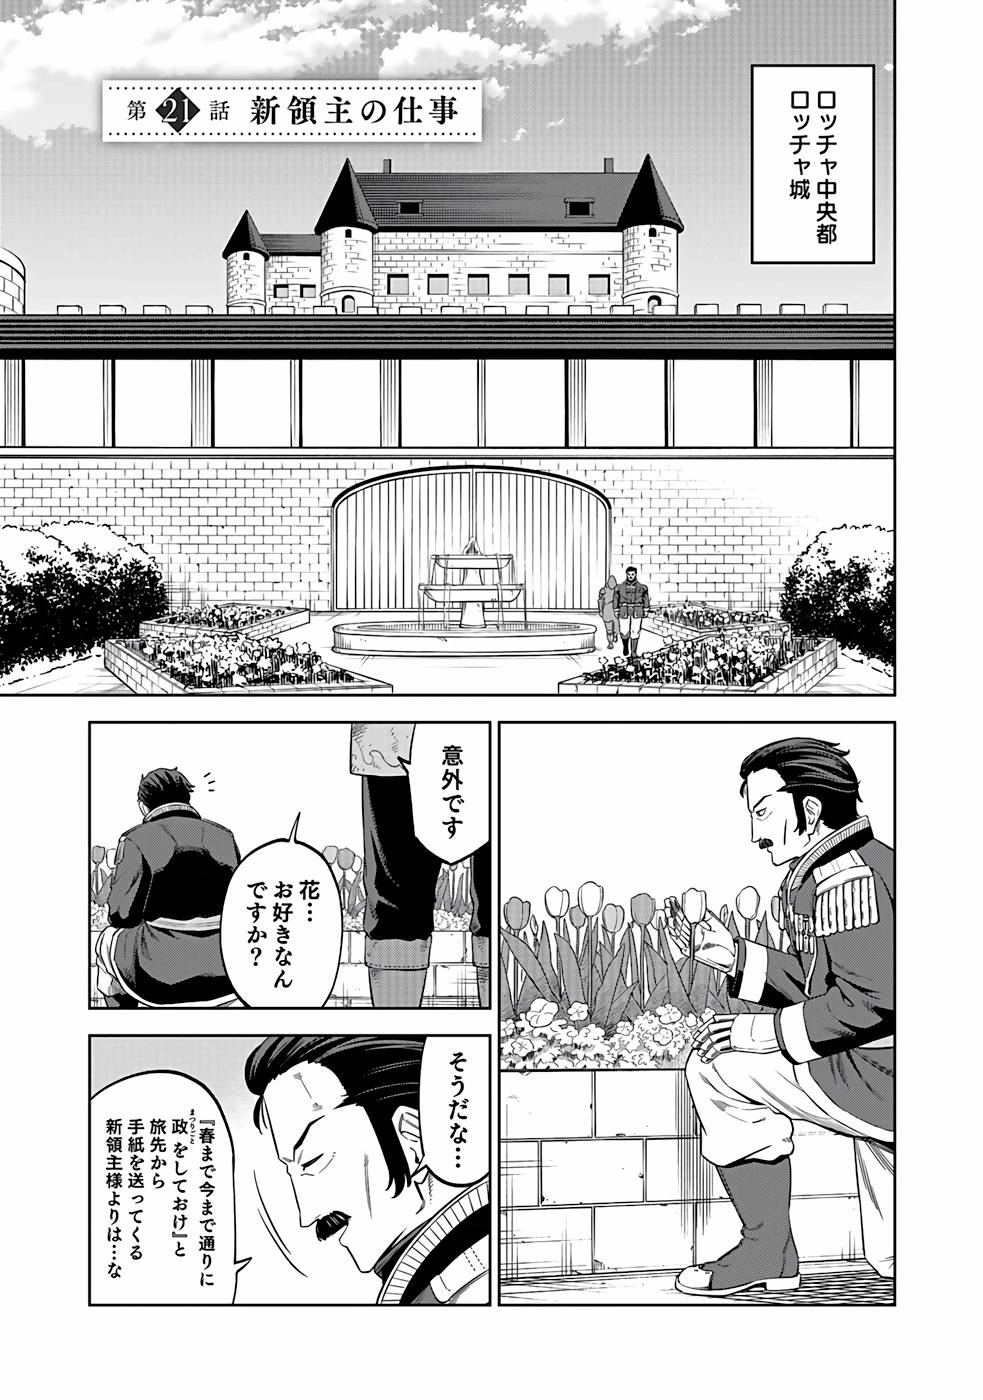 Millimos Saga: Battei Ouji no Tensei Senki - Chapter 21 - Page 1